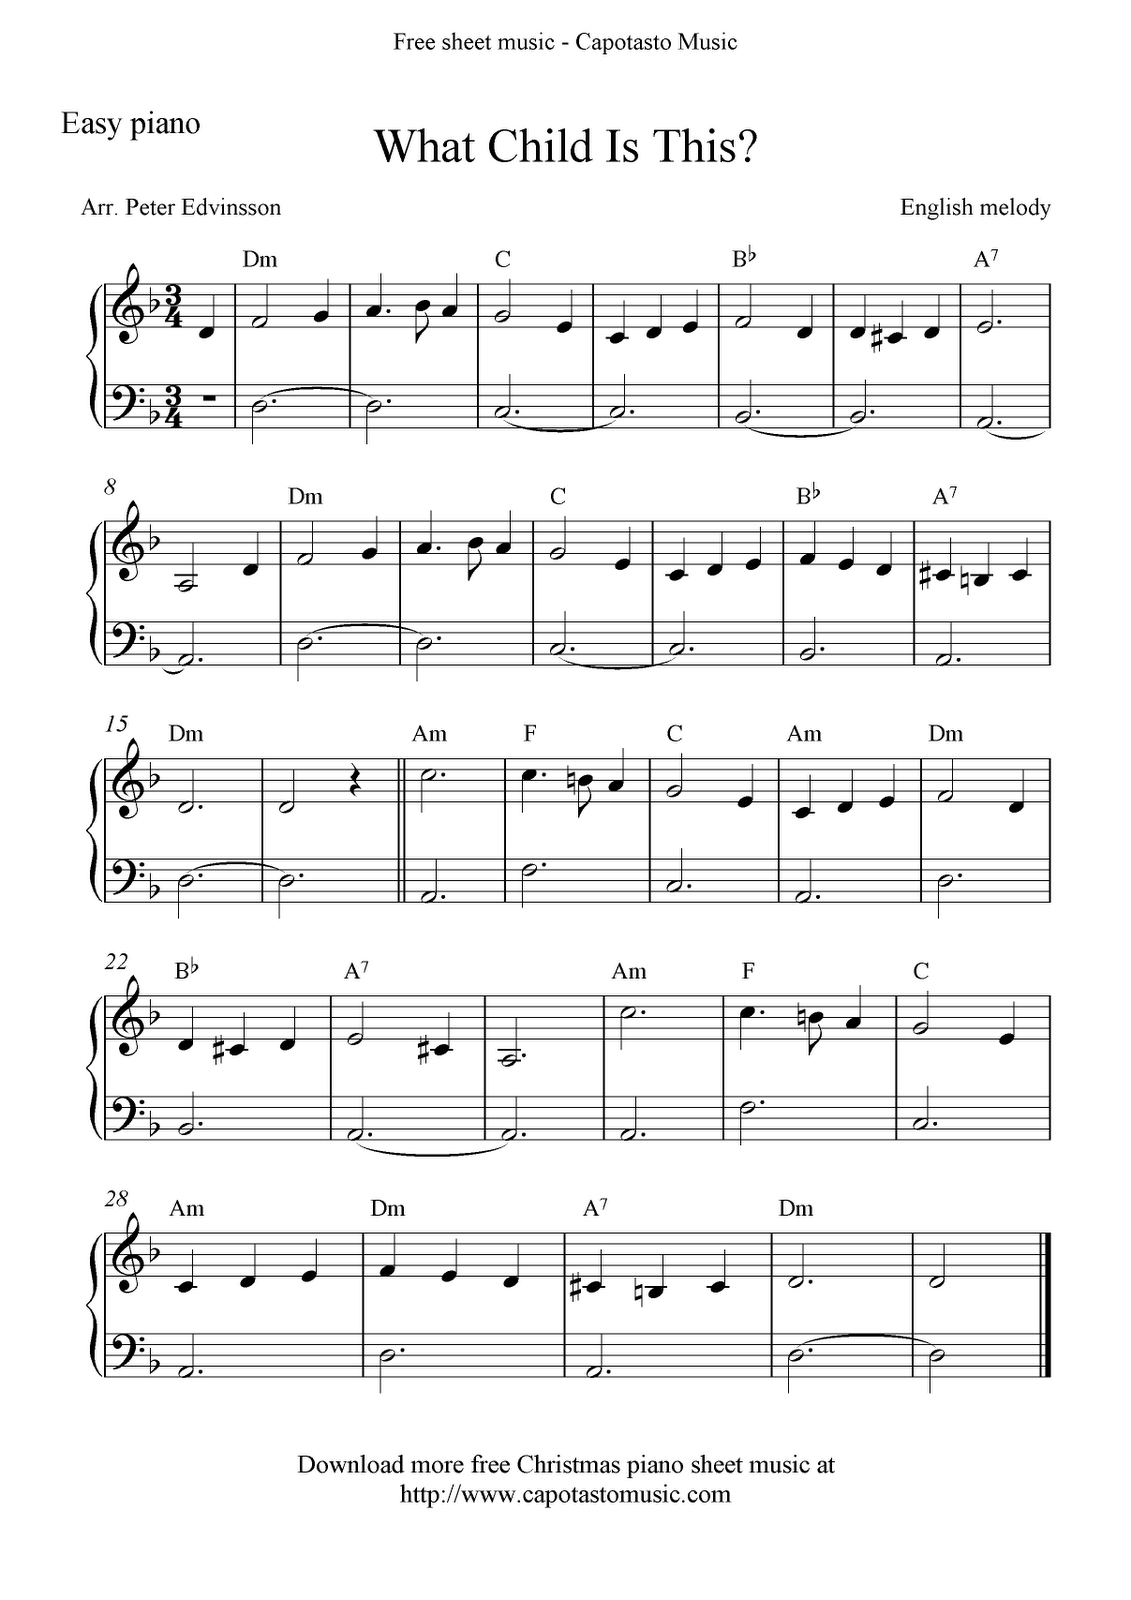 Free Printable Christmas Sheet Music | Free Sheet Music Scores: Free - Christmas Piano Sheet Music Easy Free Printable